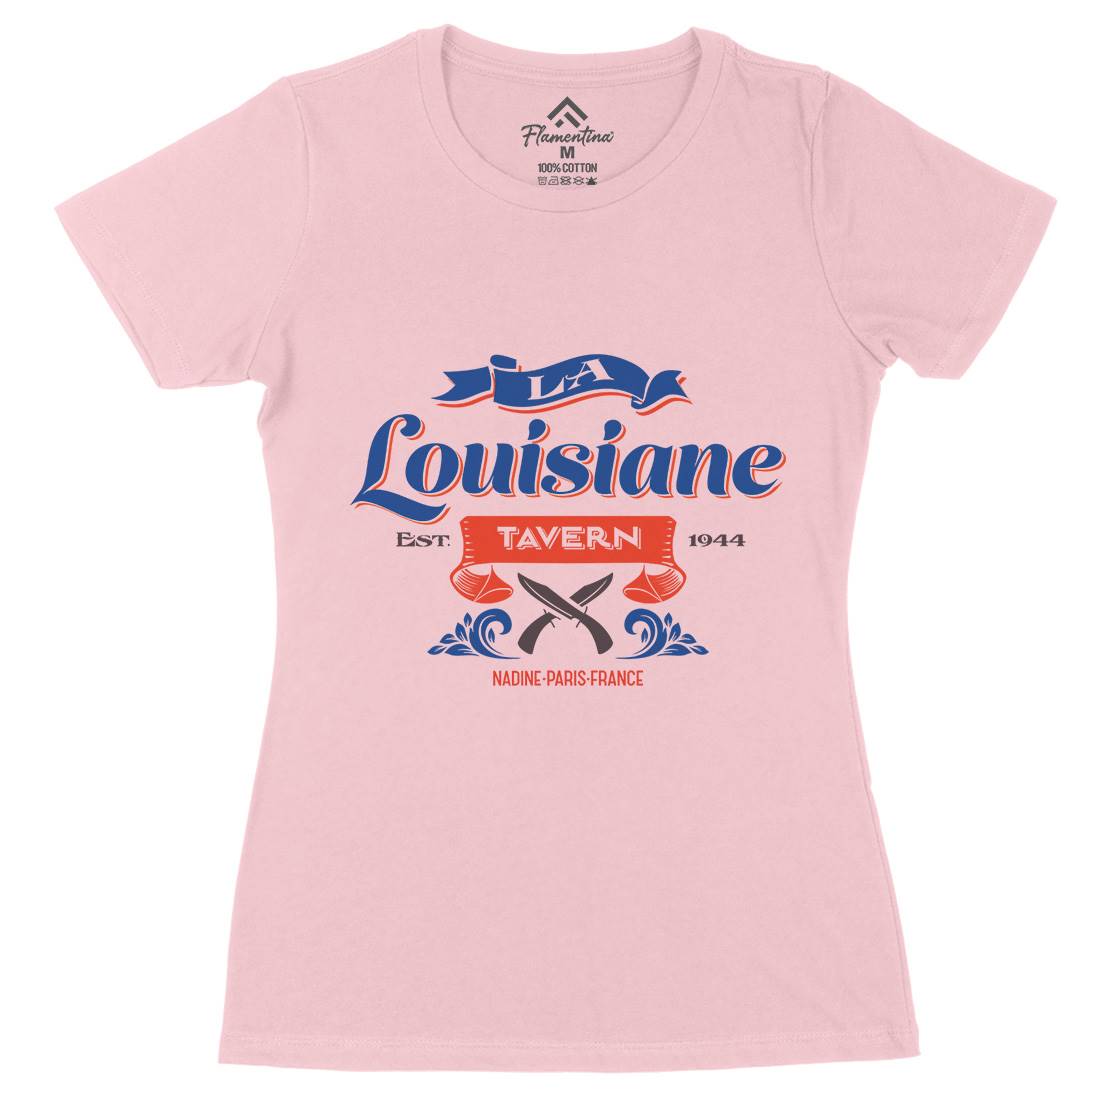 La Louisiane Tavern Womens Organic Crew Neck T-Shirt Food D317